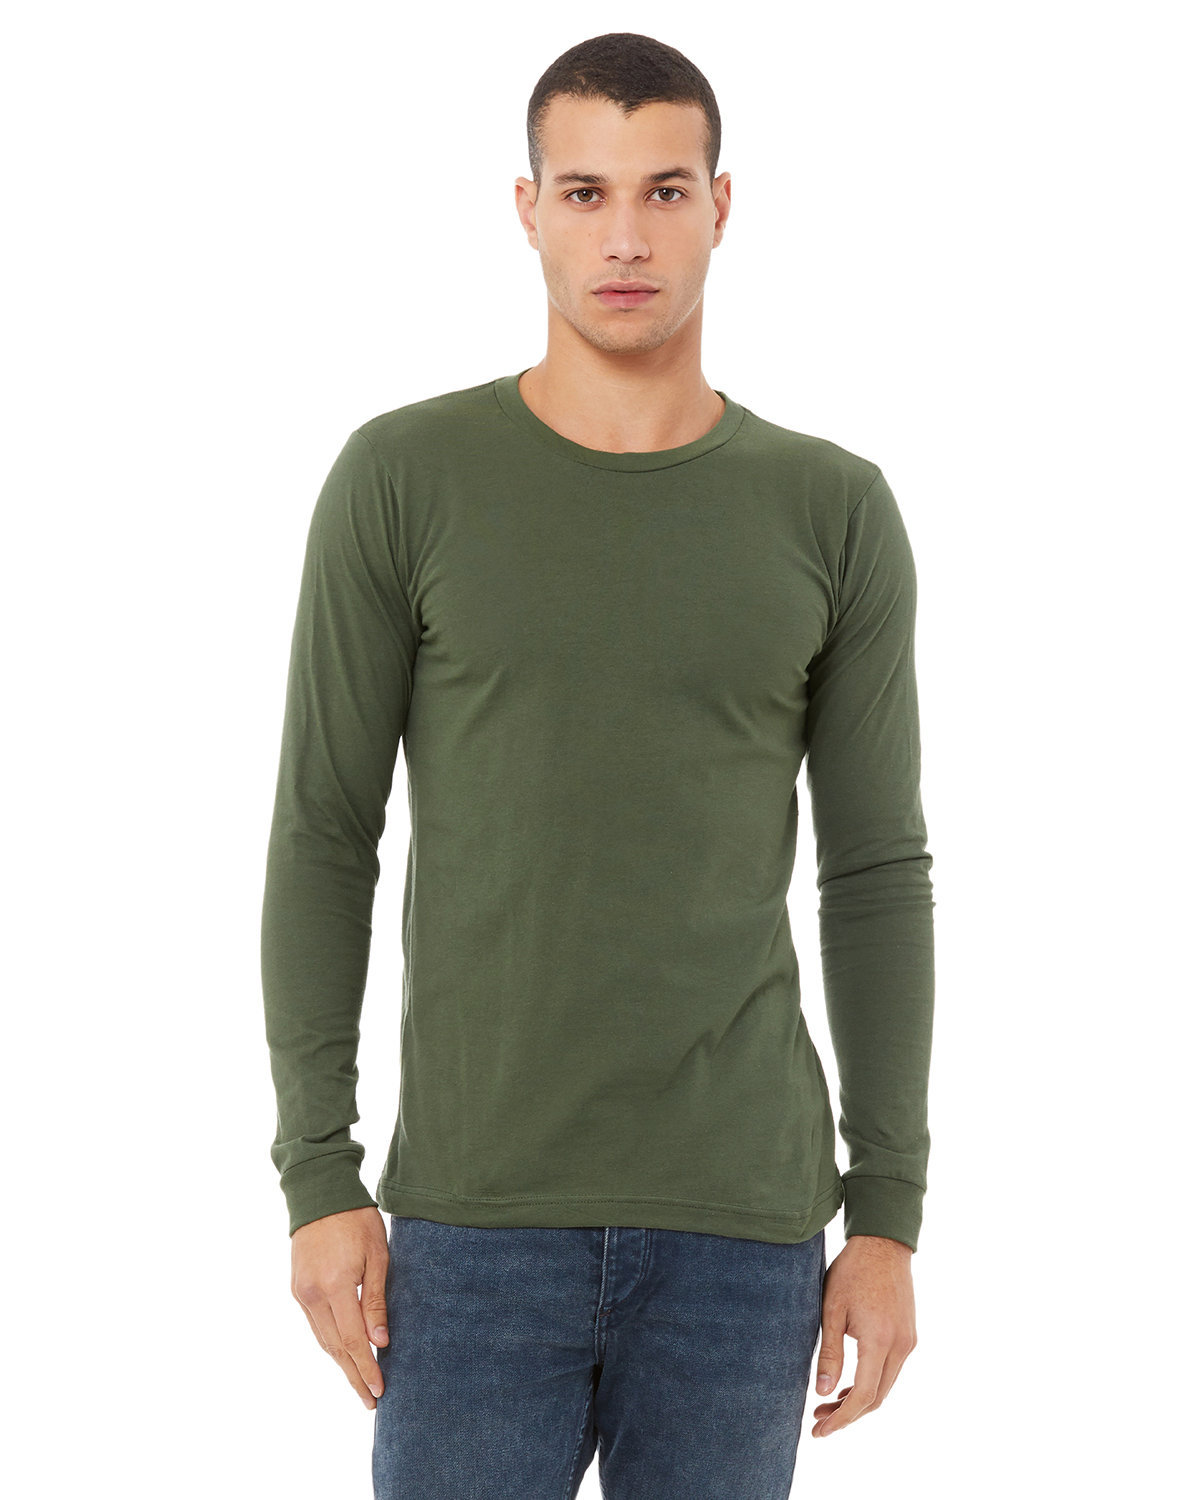 Bella + Canvas Unisex Jersey Long-Sleeve T-Shirt MILITARY GREEN 